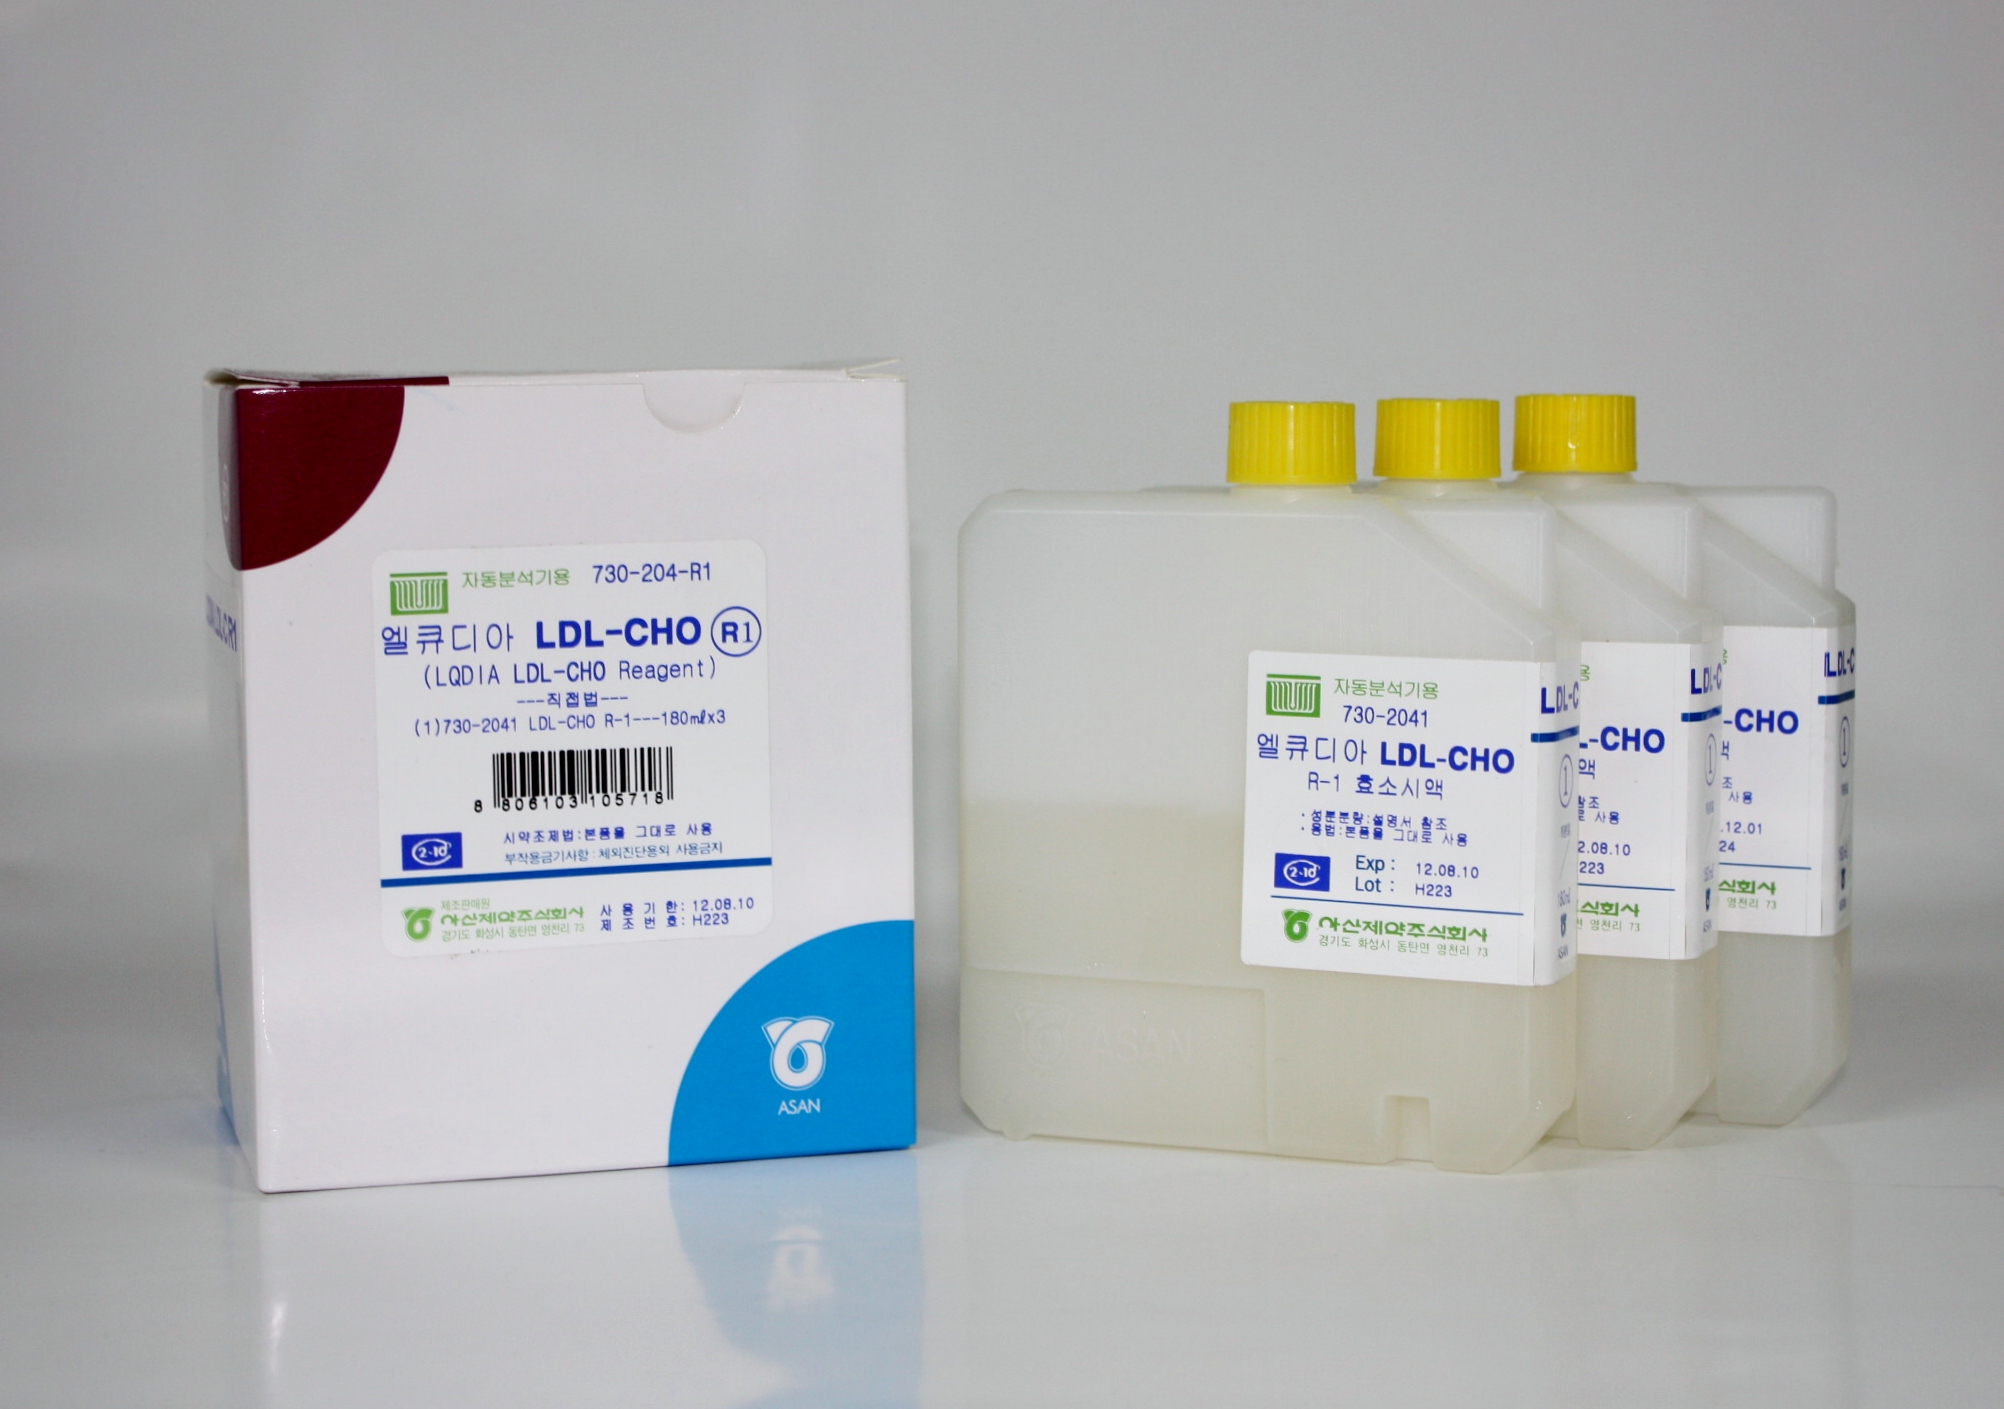 LQDIA LDL CHO R1 효소시액